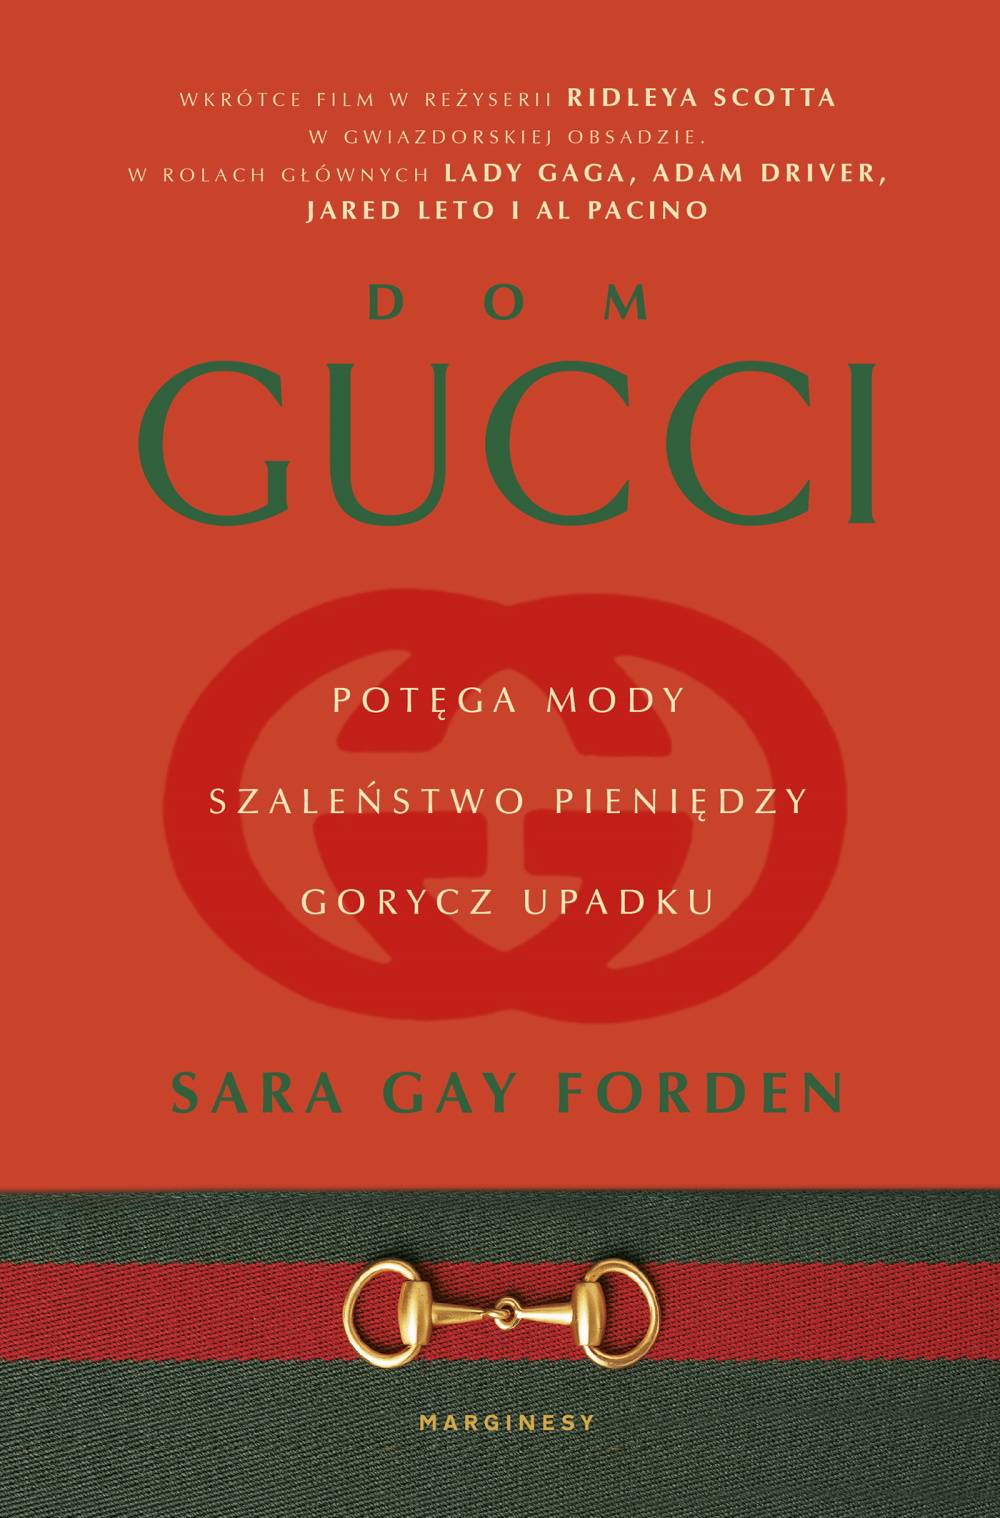 Sara Gay Forden „Dom Gucci” (Fot. materiały prasowe)